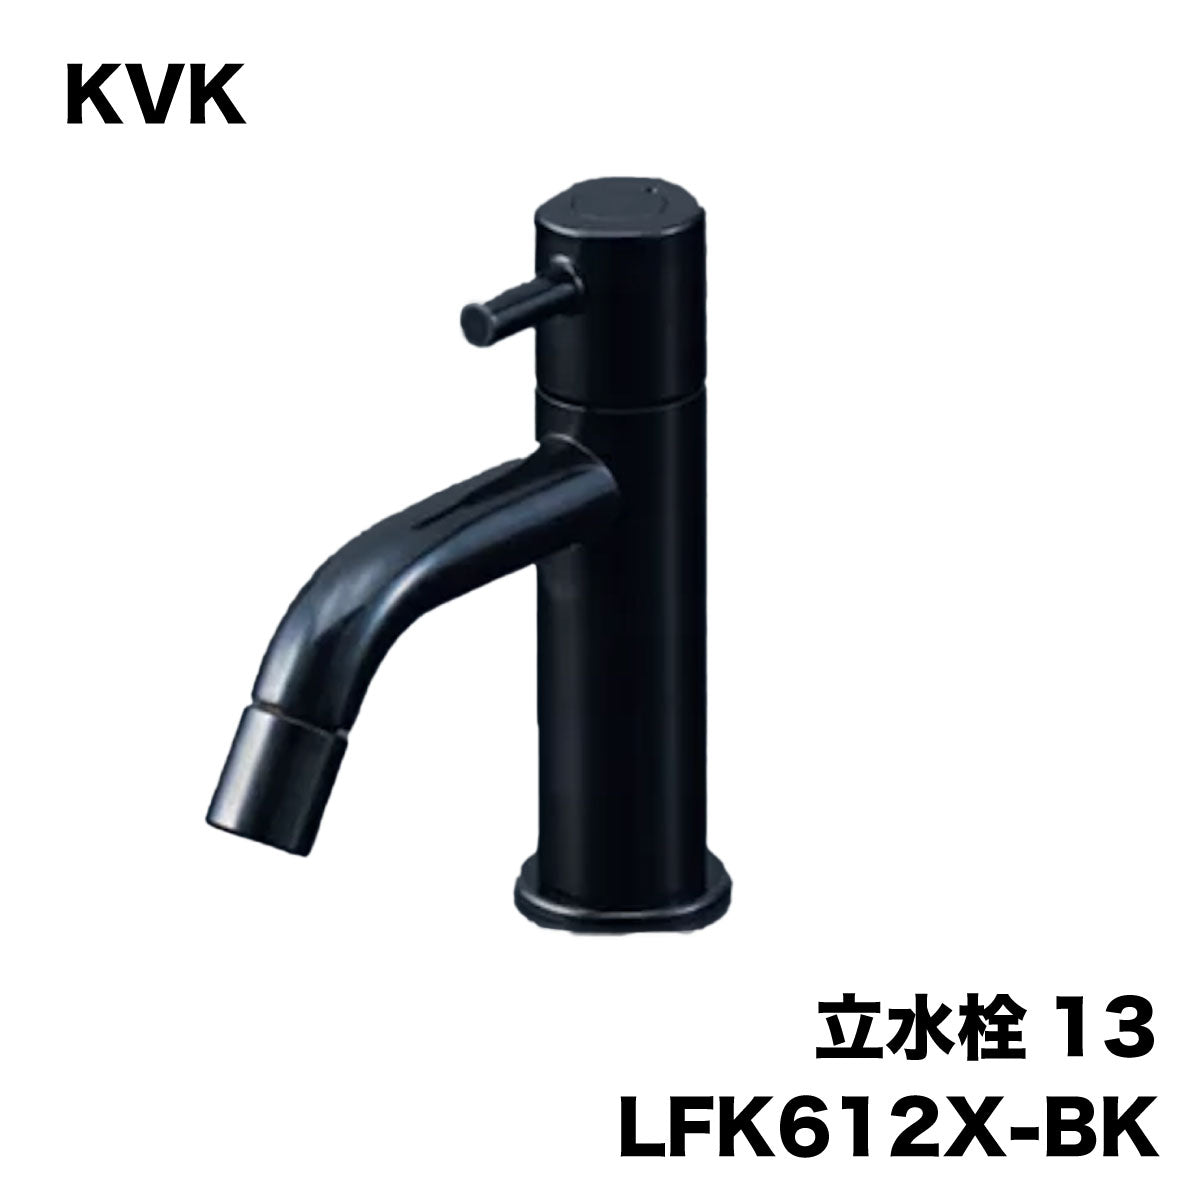  KVK 洗面 化粧室 立水栓 水栓 カラー 黒クロムめっき - 5